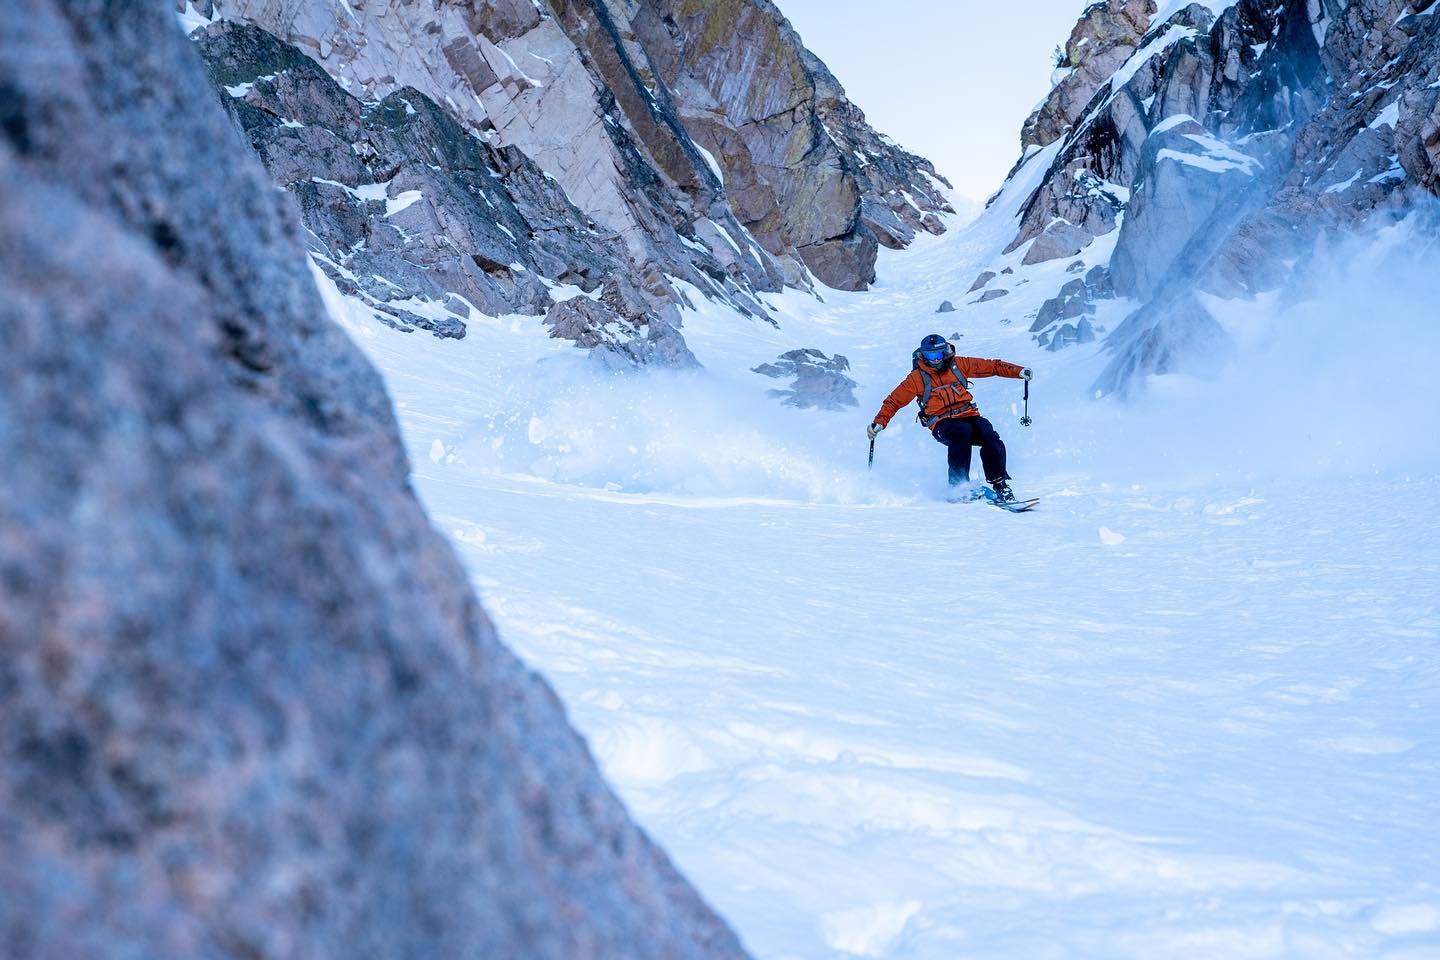 Cody Townsend ski mountaineering